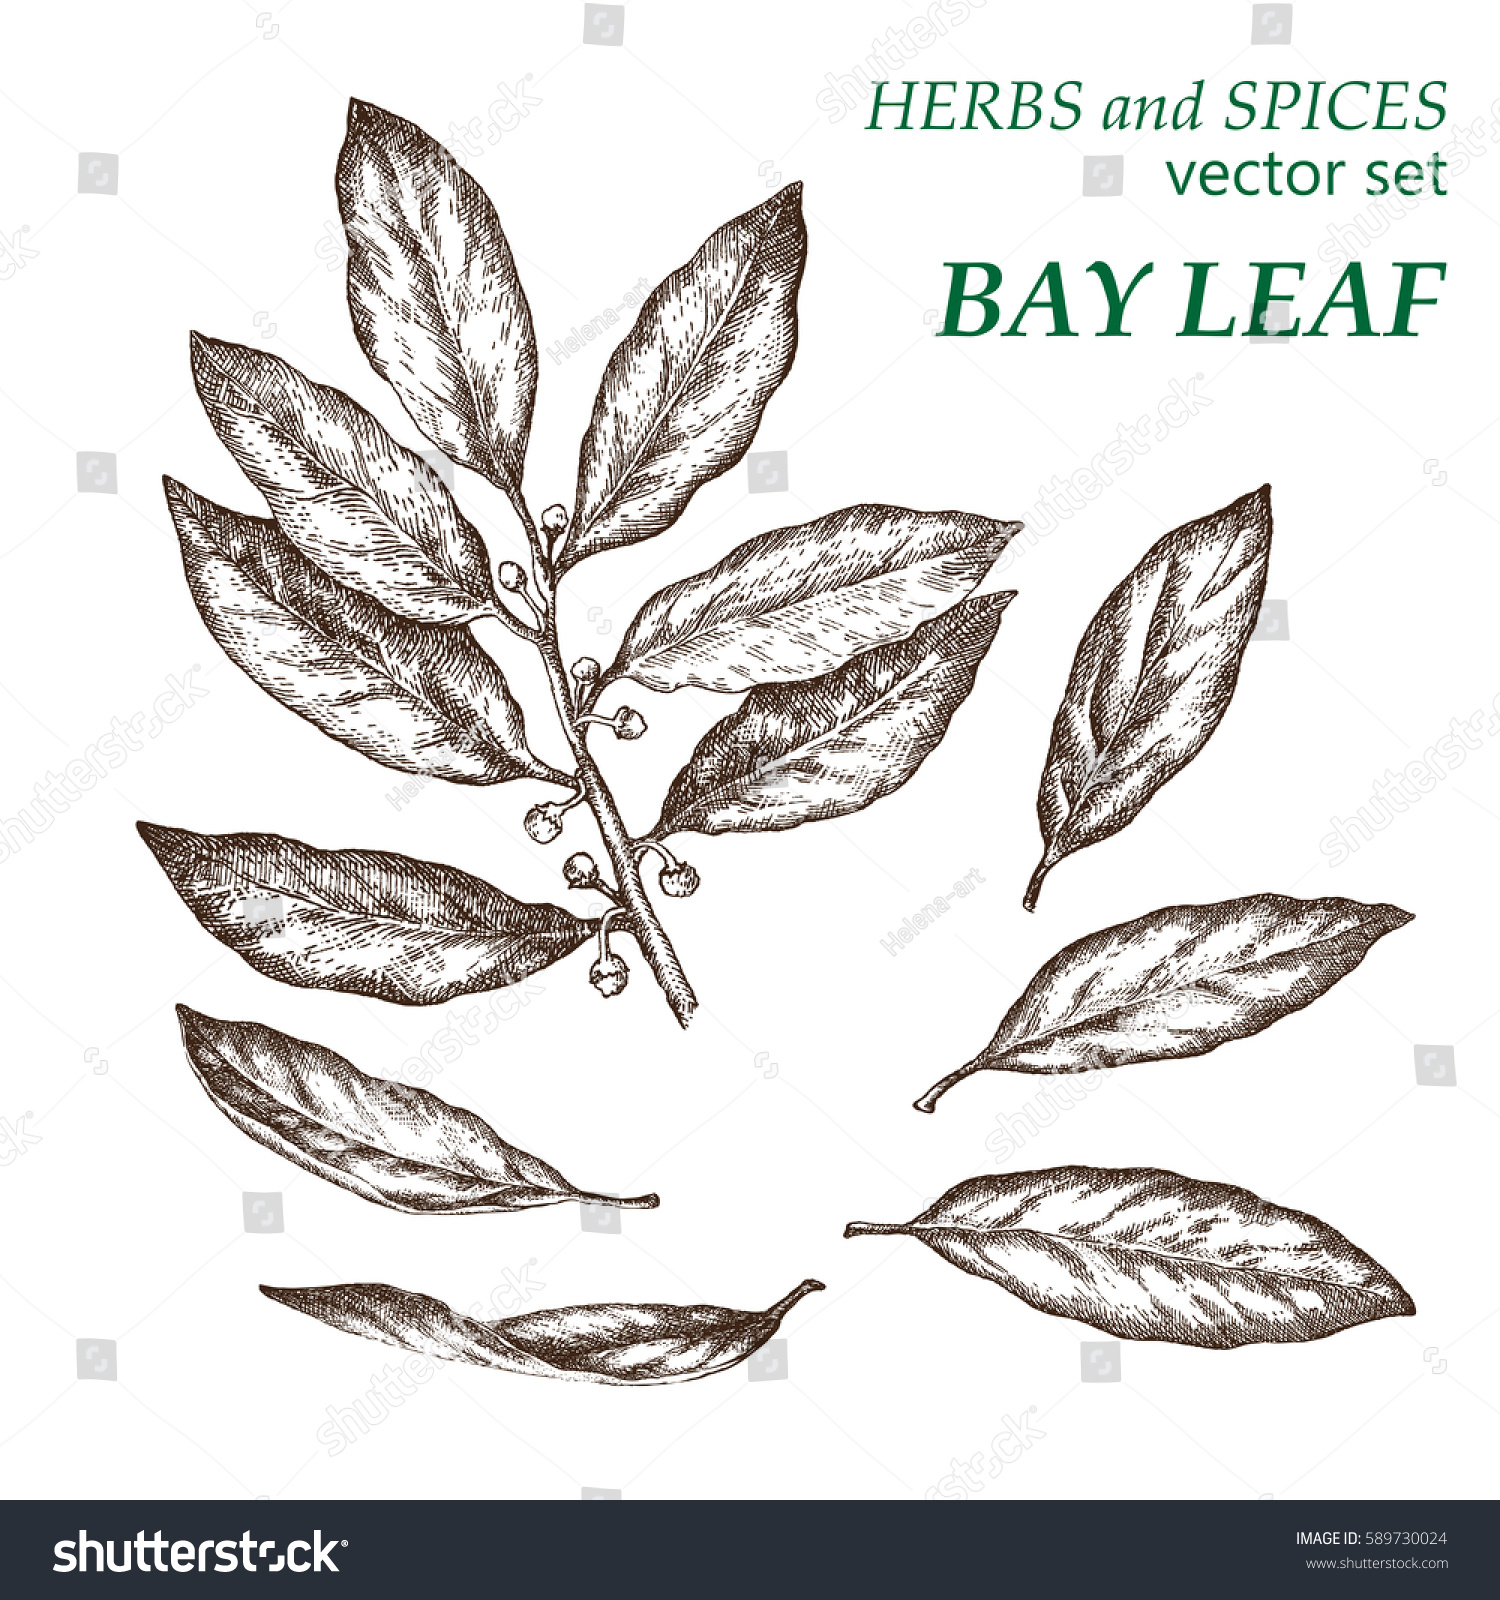 SVG of Bay leaf.  Botanical Illustration. Herbs and Spices.  The drawing hands. svg